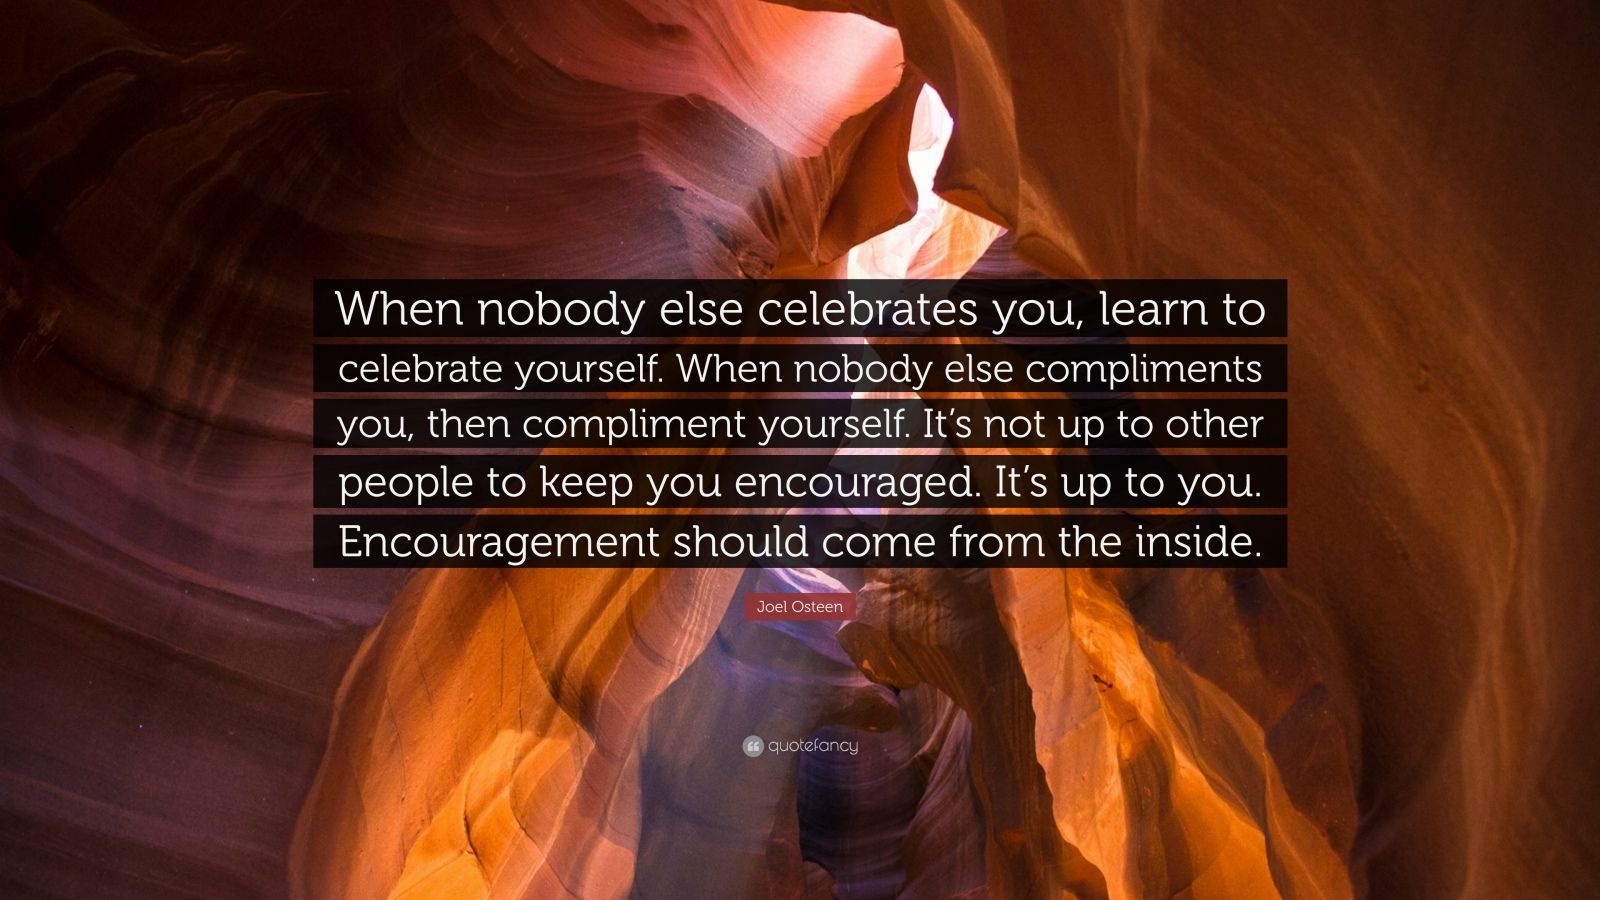 Celebrate yourself